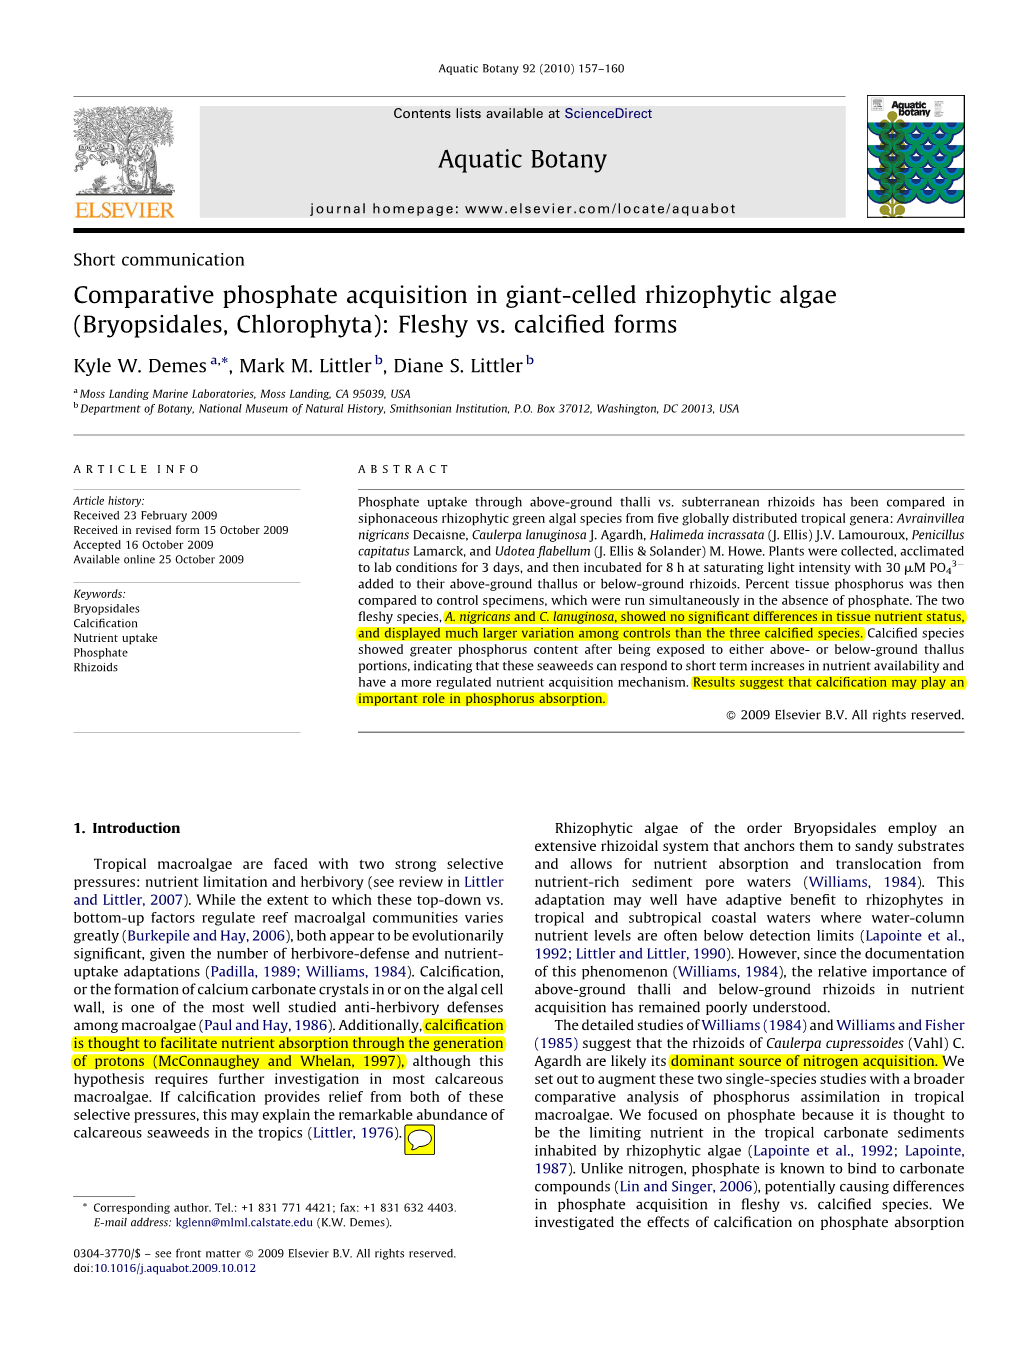 Comparative Phosphate Acquisition in Giant-Celled Rhizophytic Algae (Bryopsidales, Chlorophyta): Fleshy Vs